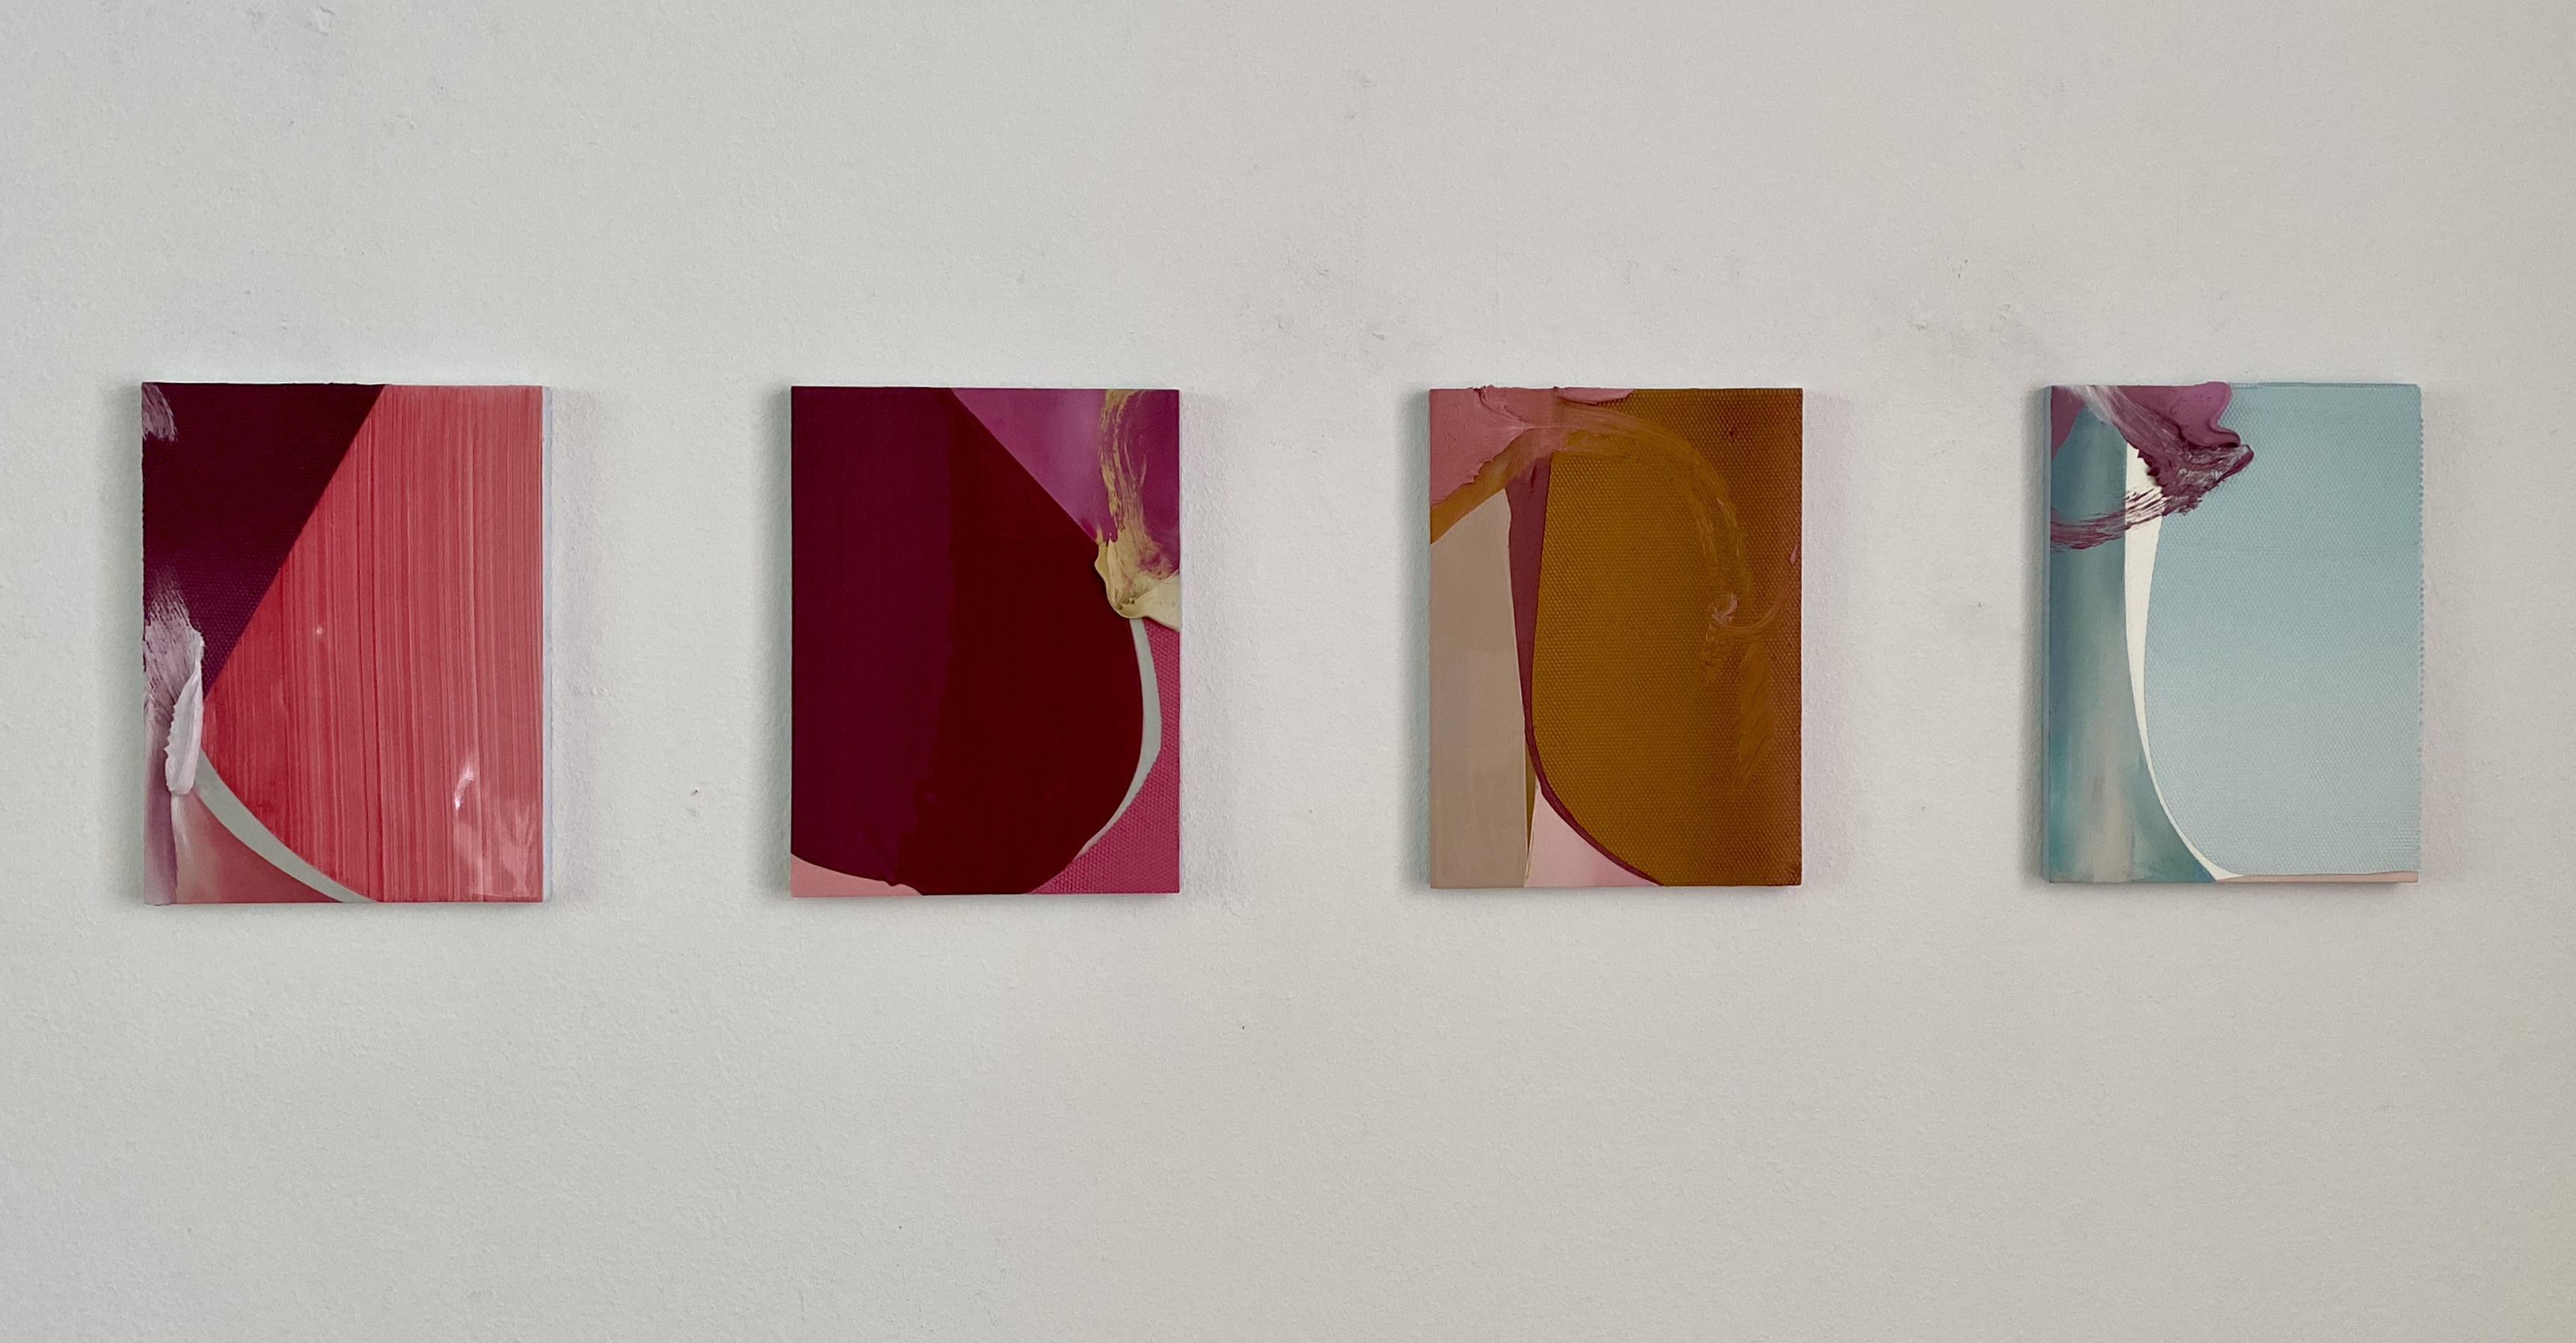 Fragmente I, II, III und IV - acrylic and oil on wood  - 2020 - 40 x 30 cm  